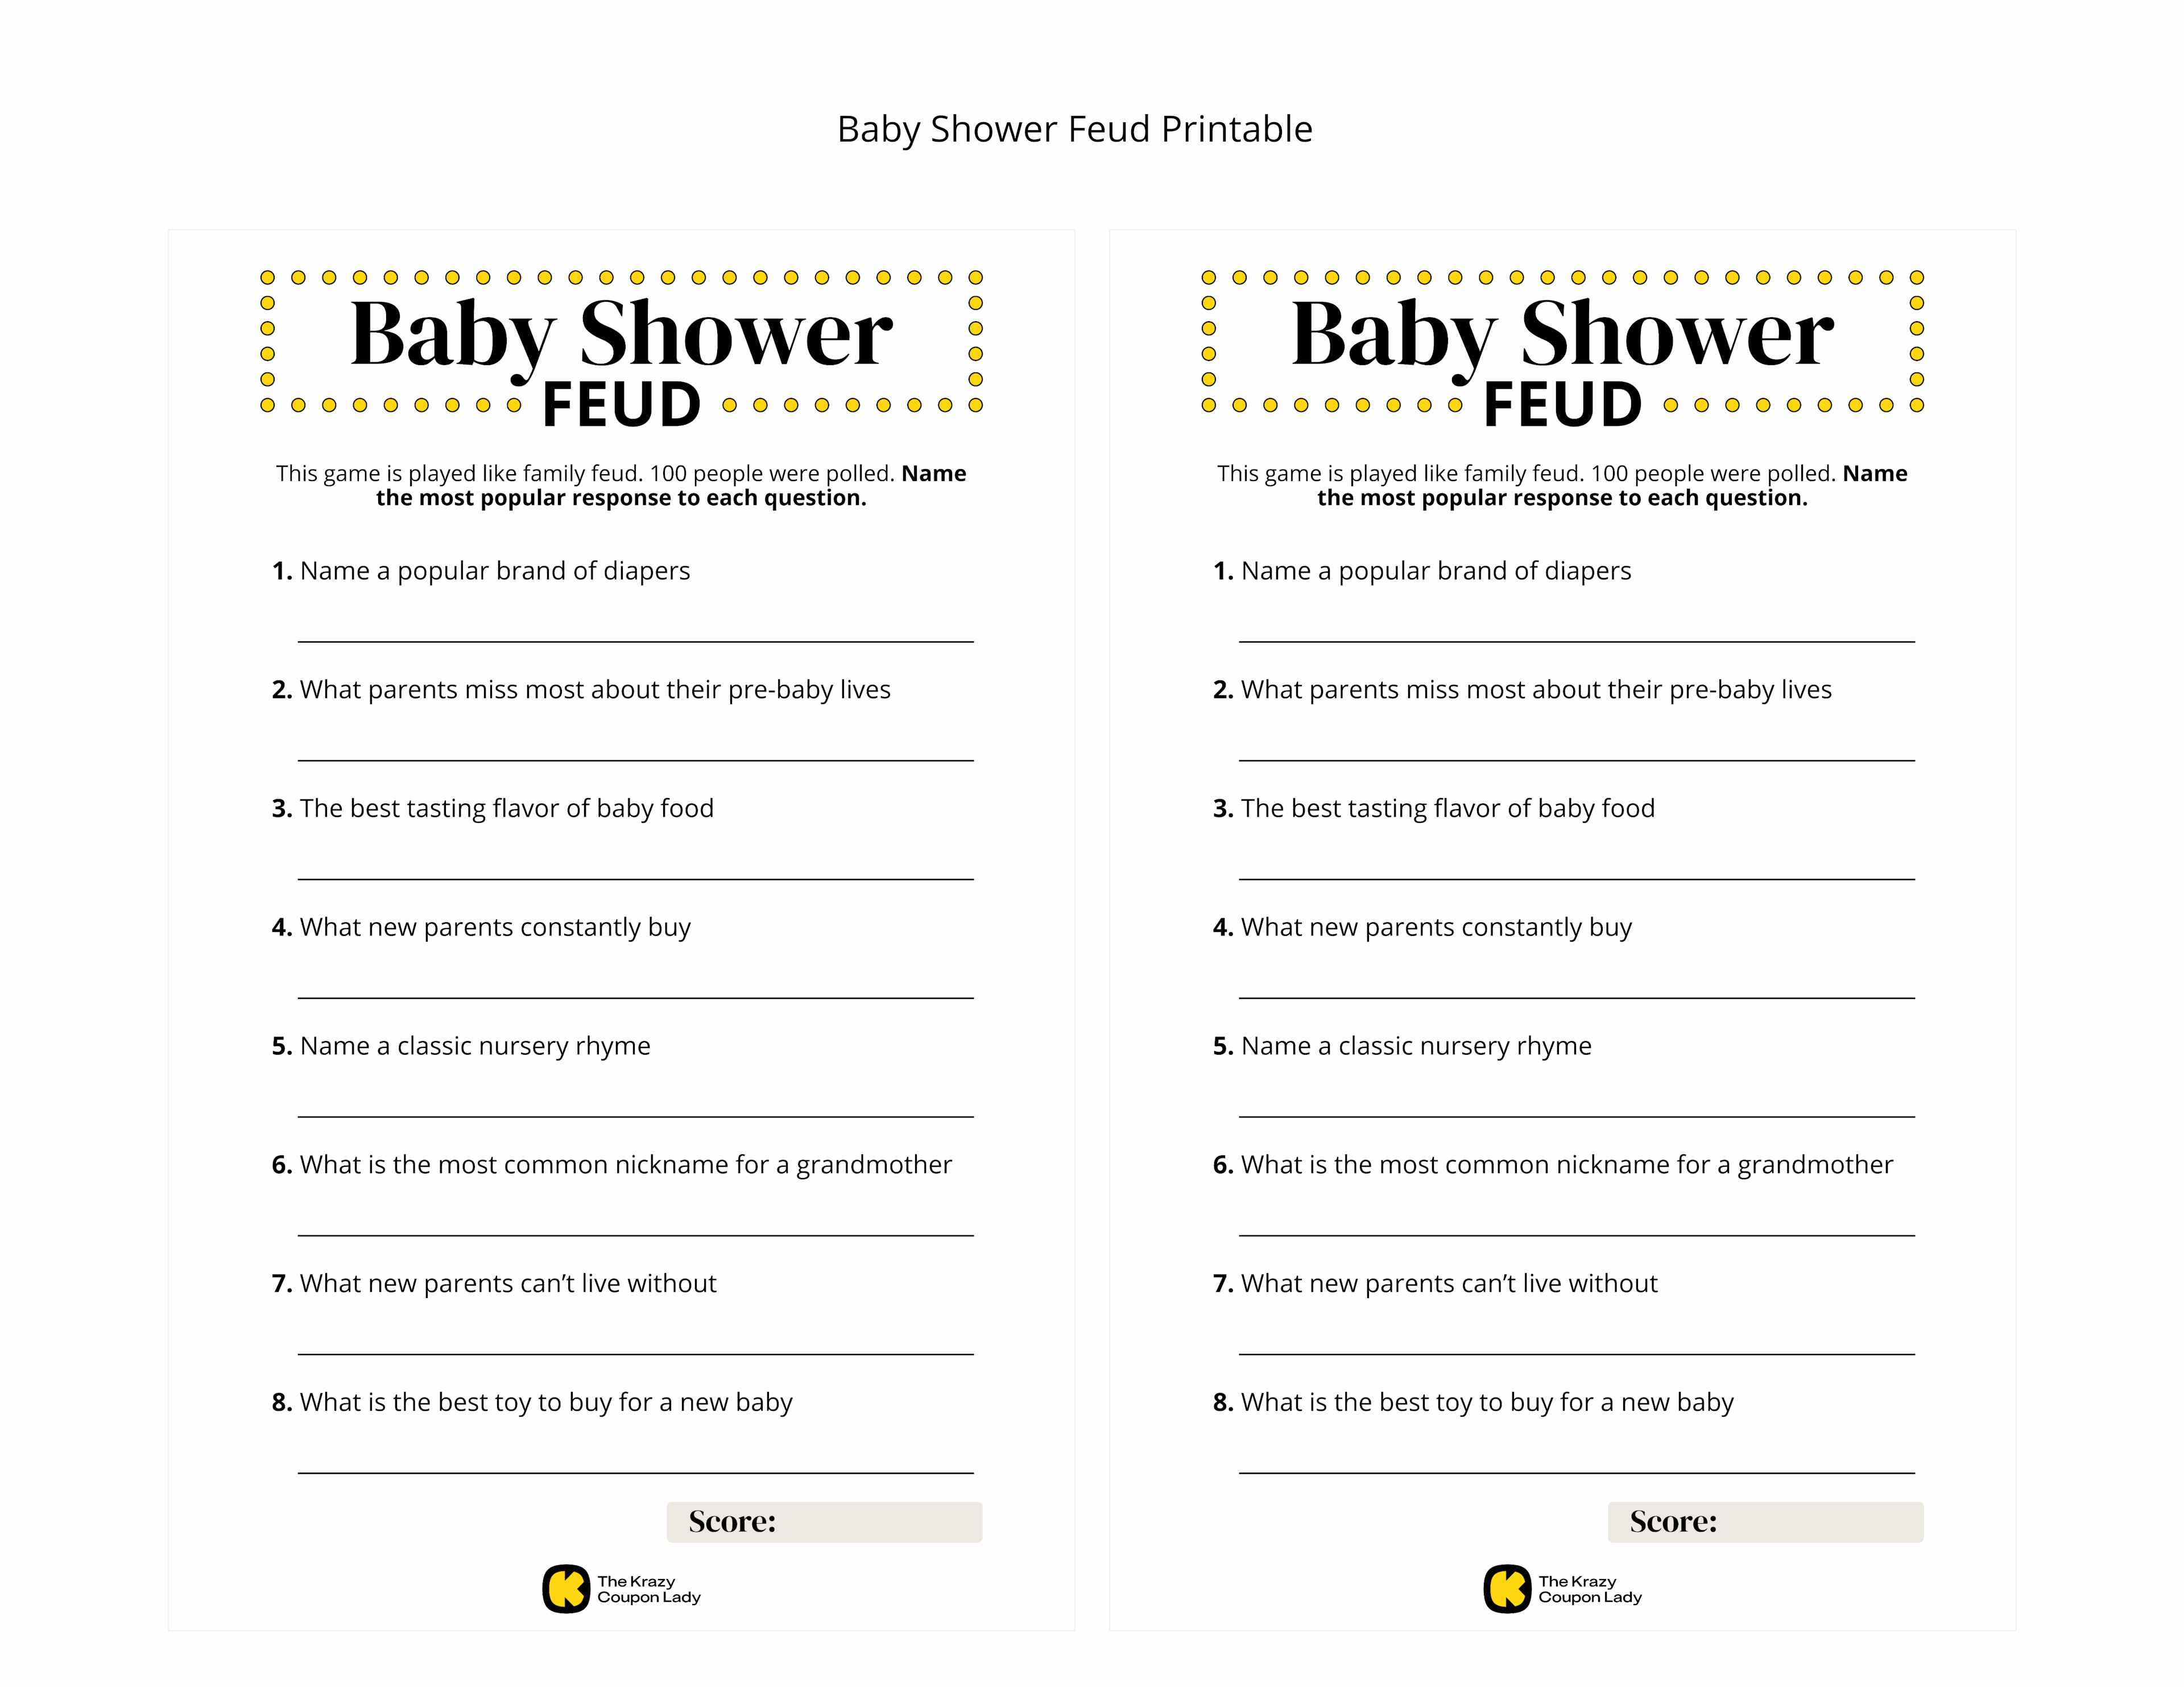 Baby Shower Feud printable game